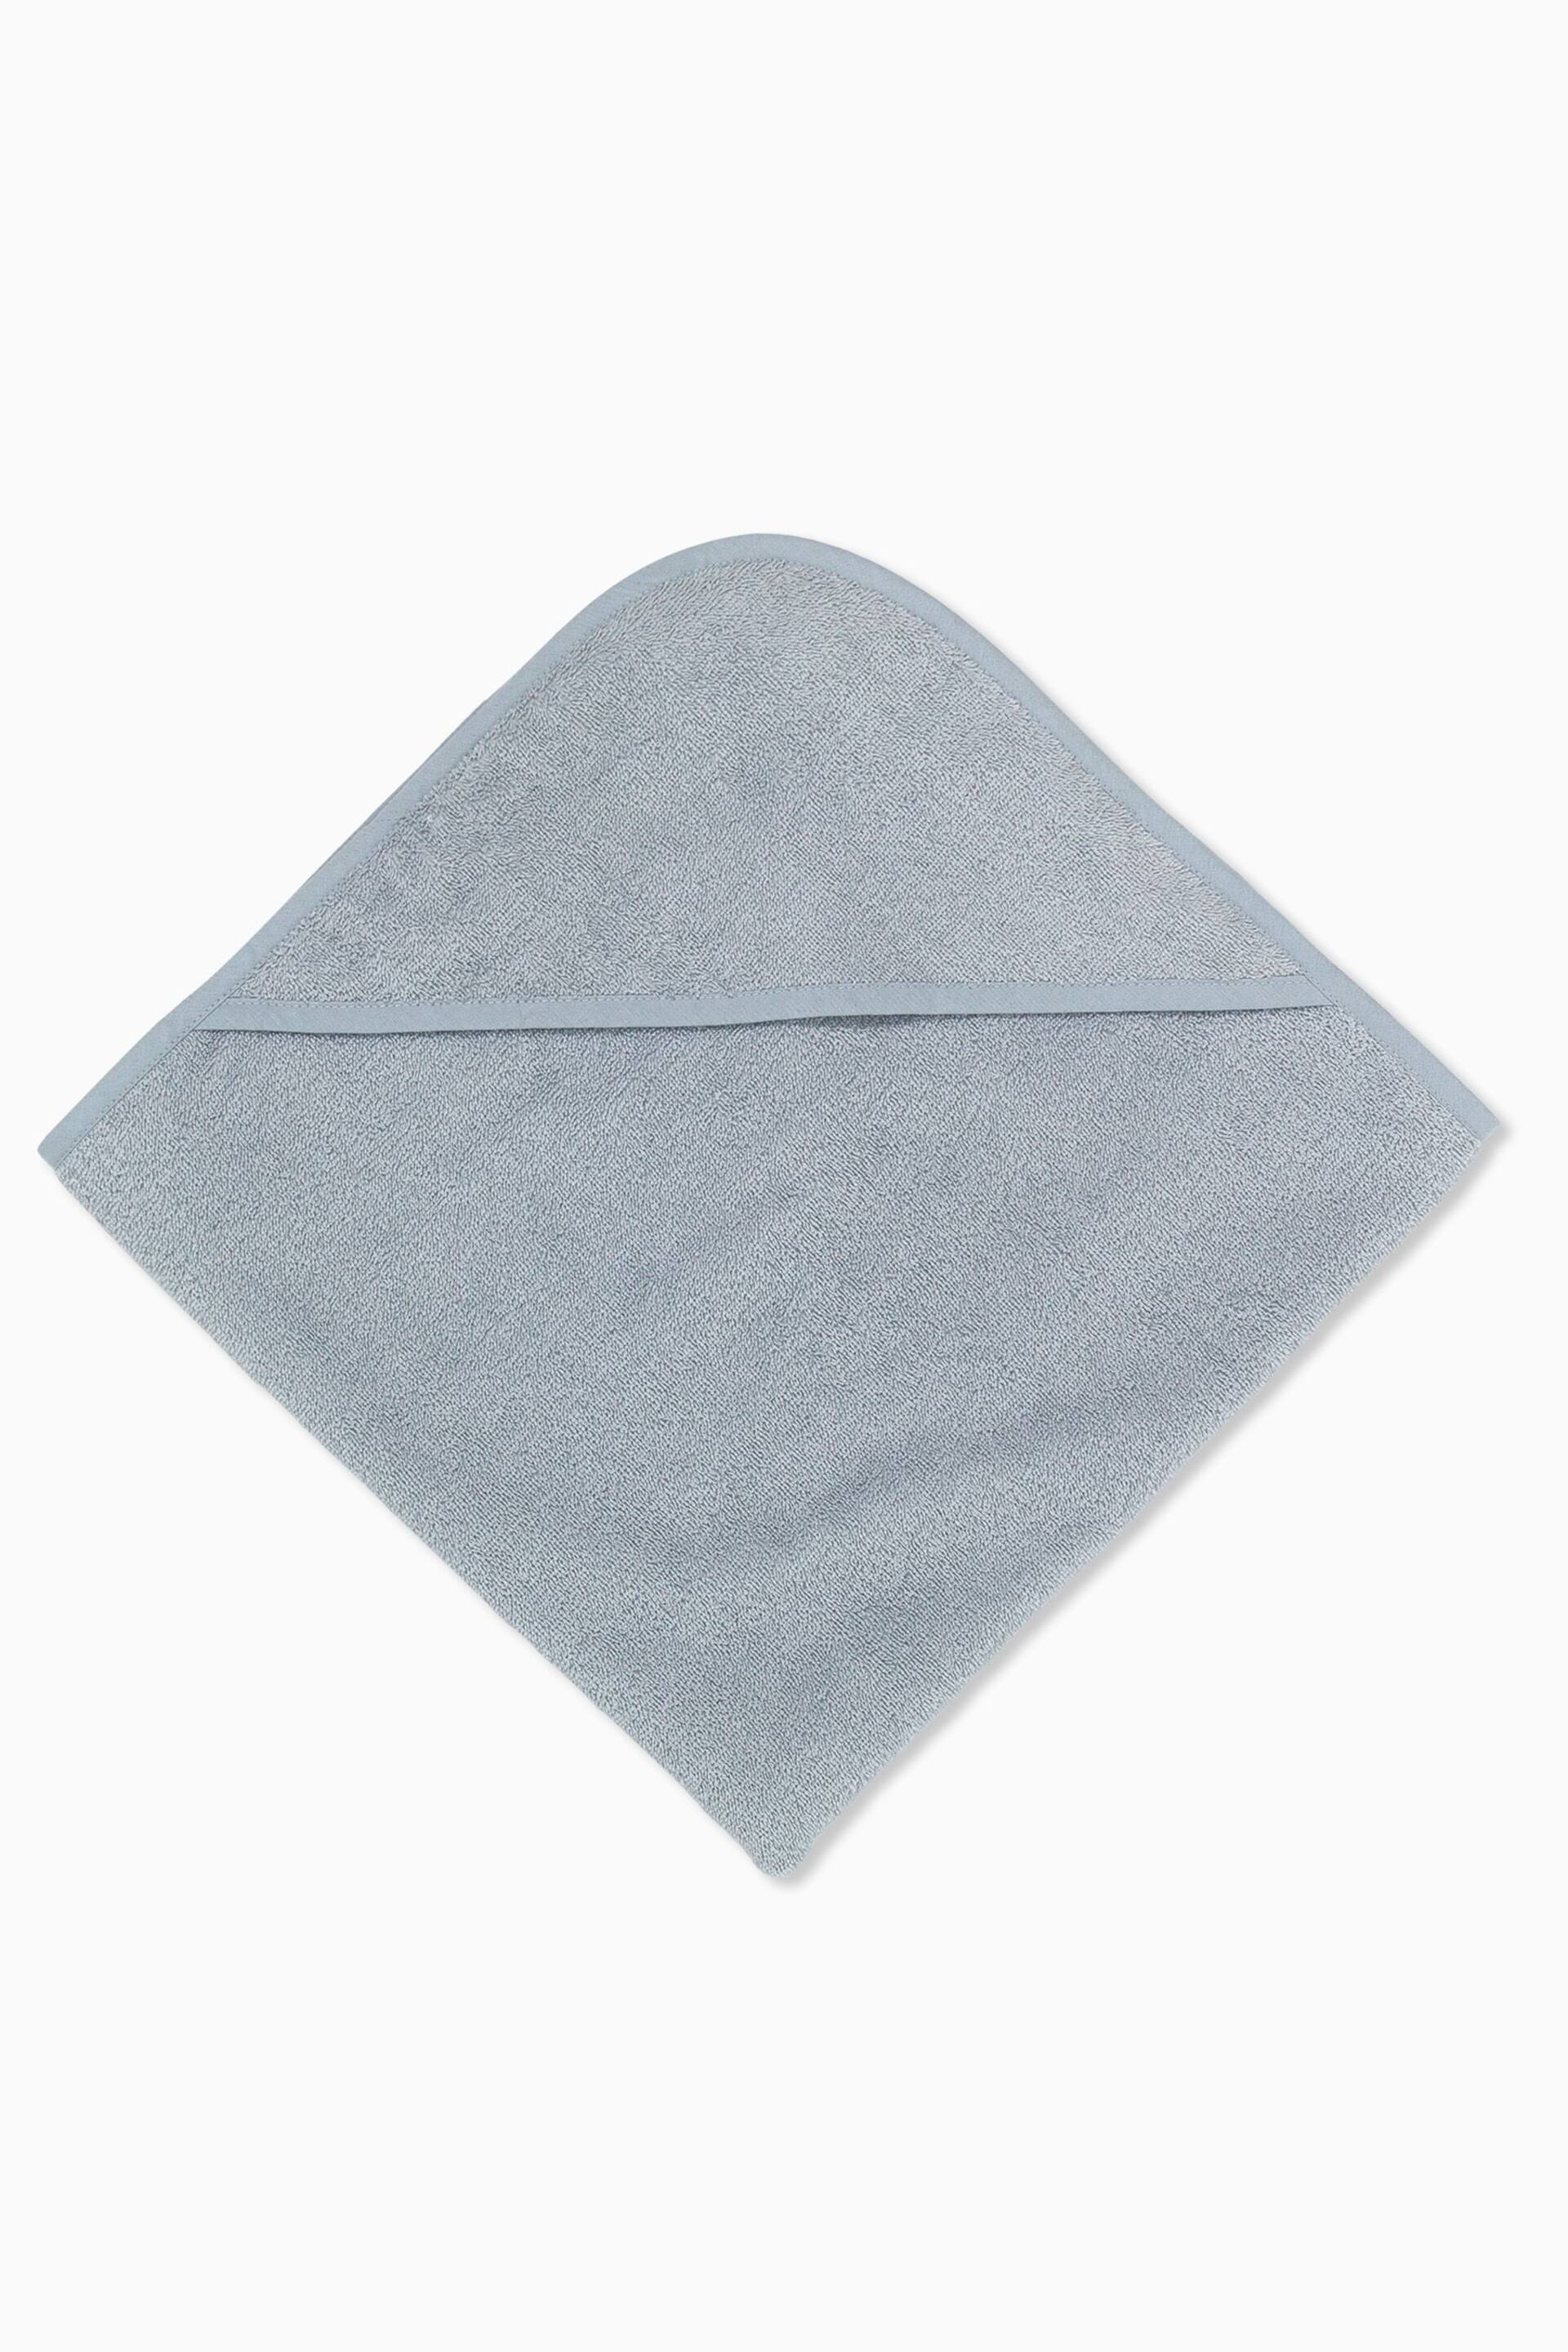 MORI Organic Cotton Super Soft Hooded Towel - Image 5 of 5